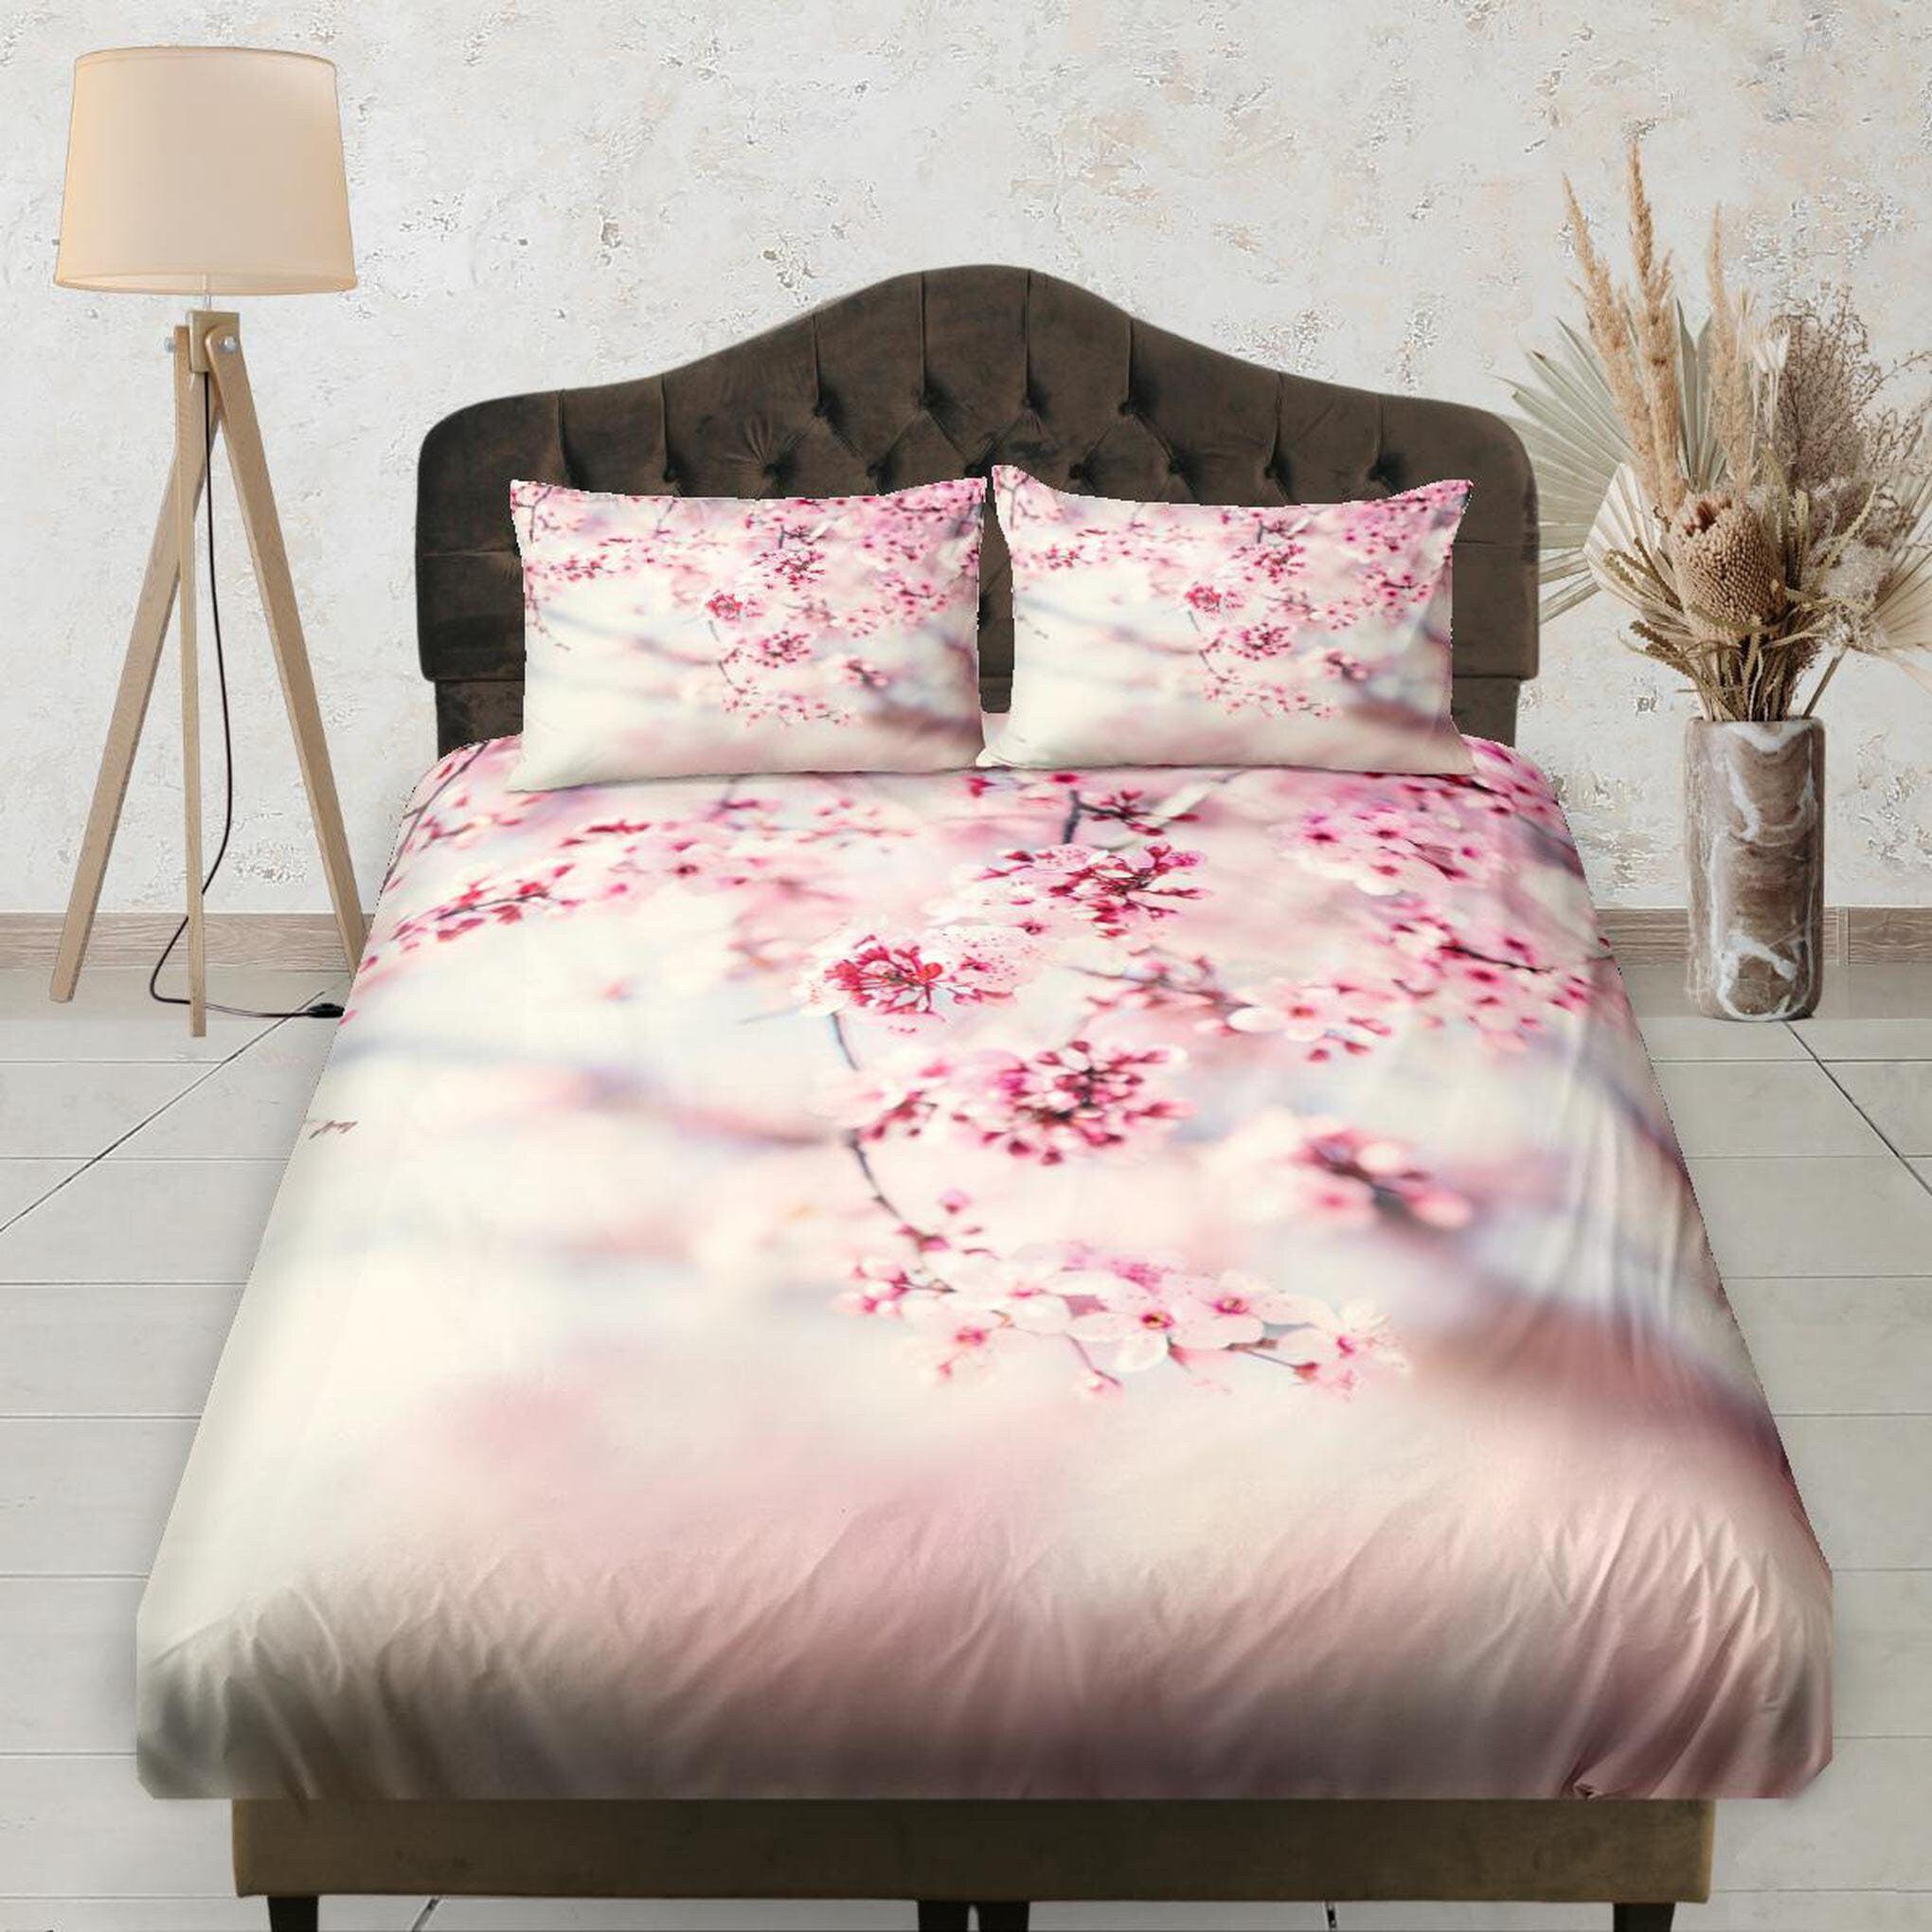 daintyduvet Baby Pink Cherry Blossoms Fitted Bedsheet, Floral Prints, Aesthetic Boho Bedding Set Full, Dorm Bedding, Crib Sheet, Shabby Chic Bedding